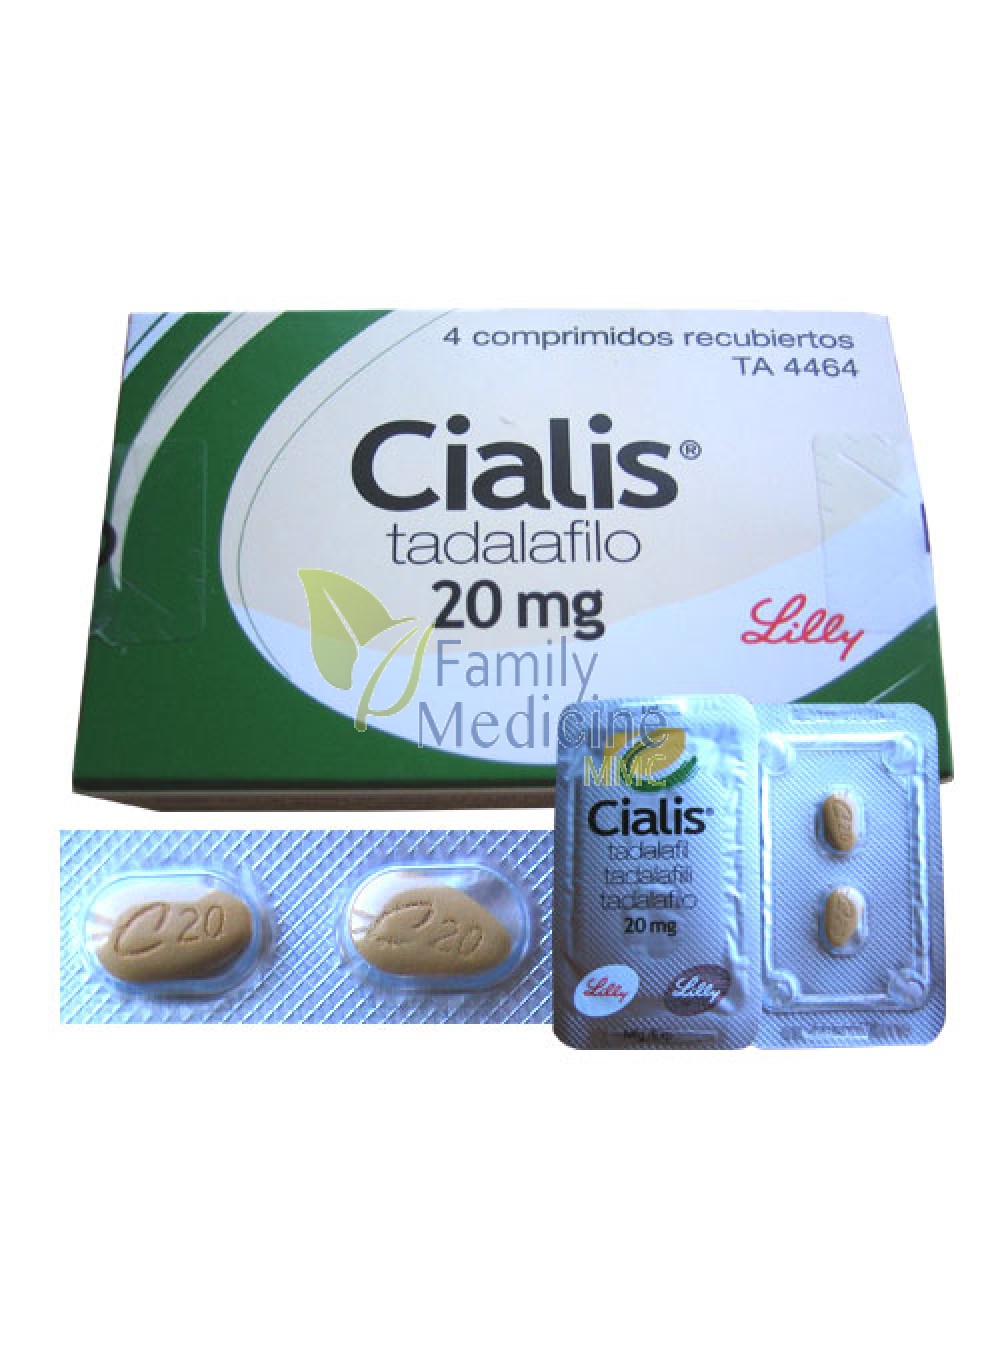 Buy Cialis 20mg | Generic Cialis Online India - JK ...